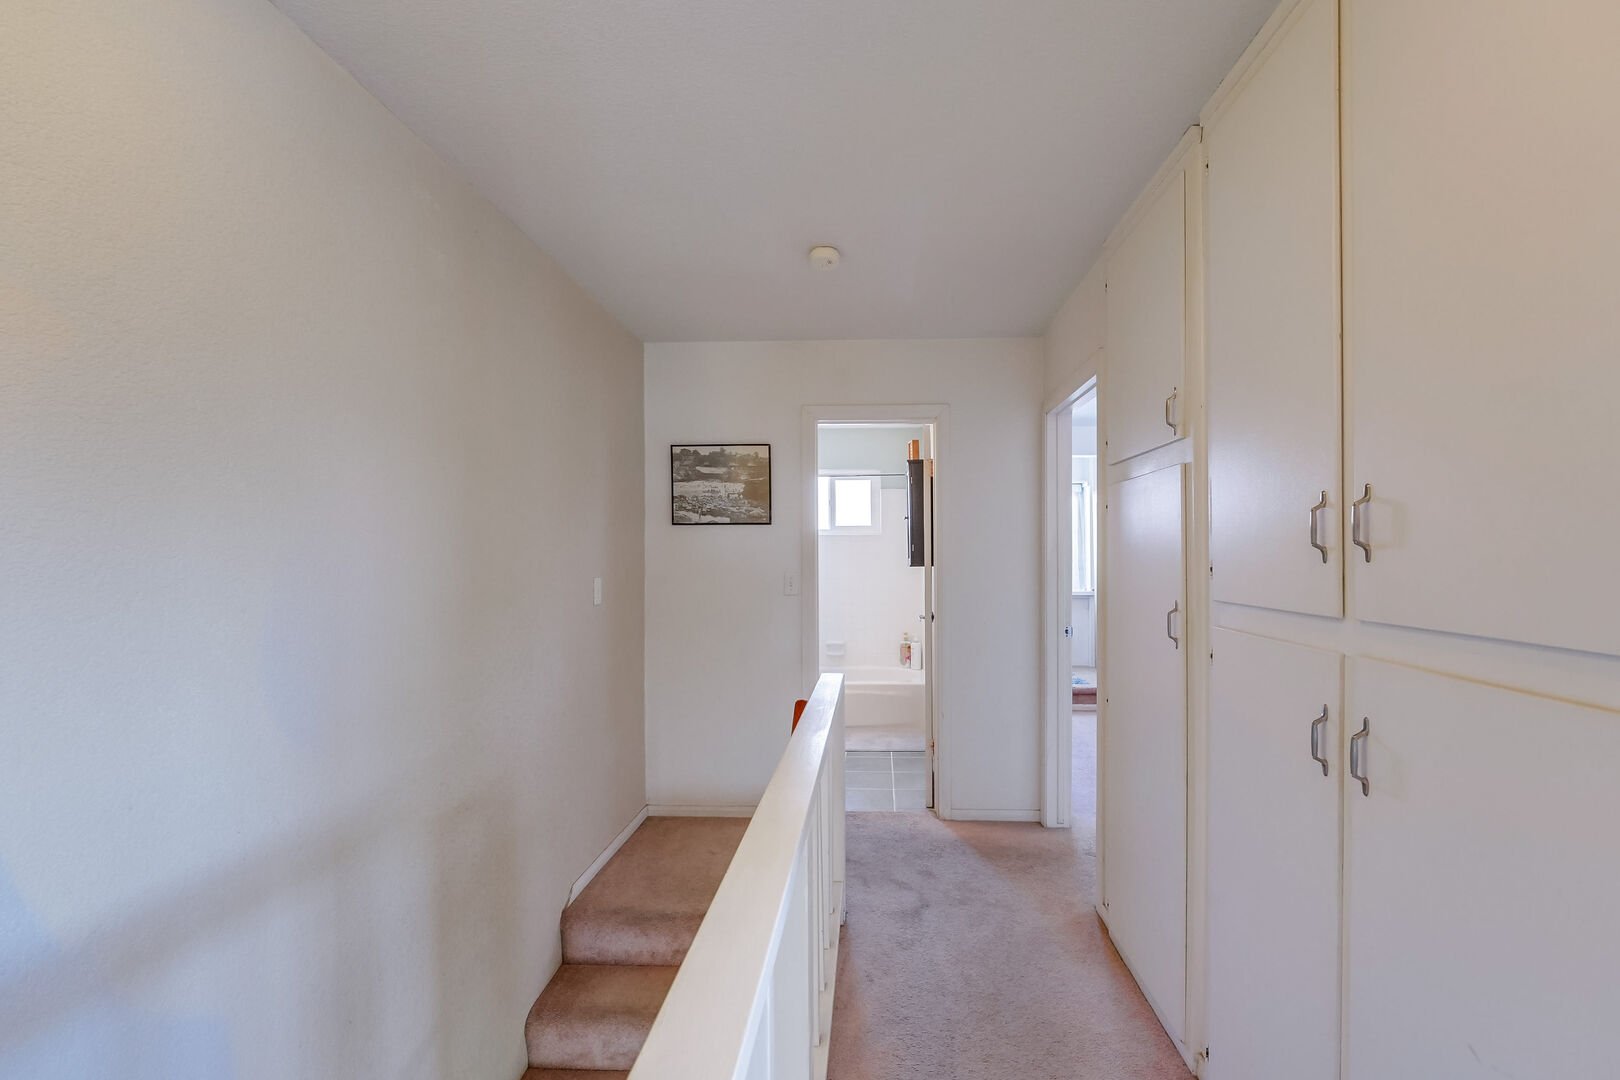 Hallway between bedrooms on the second level